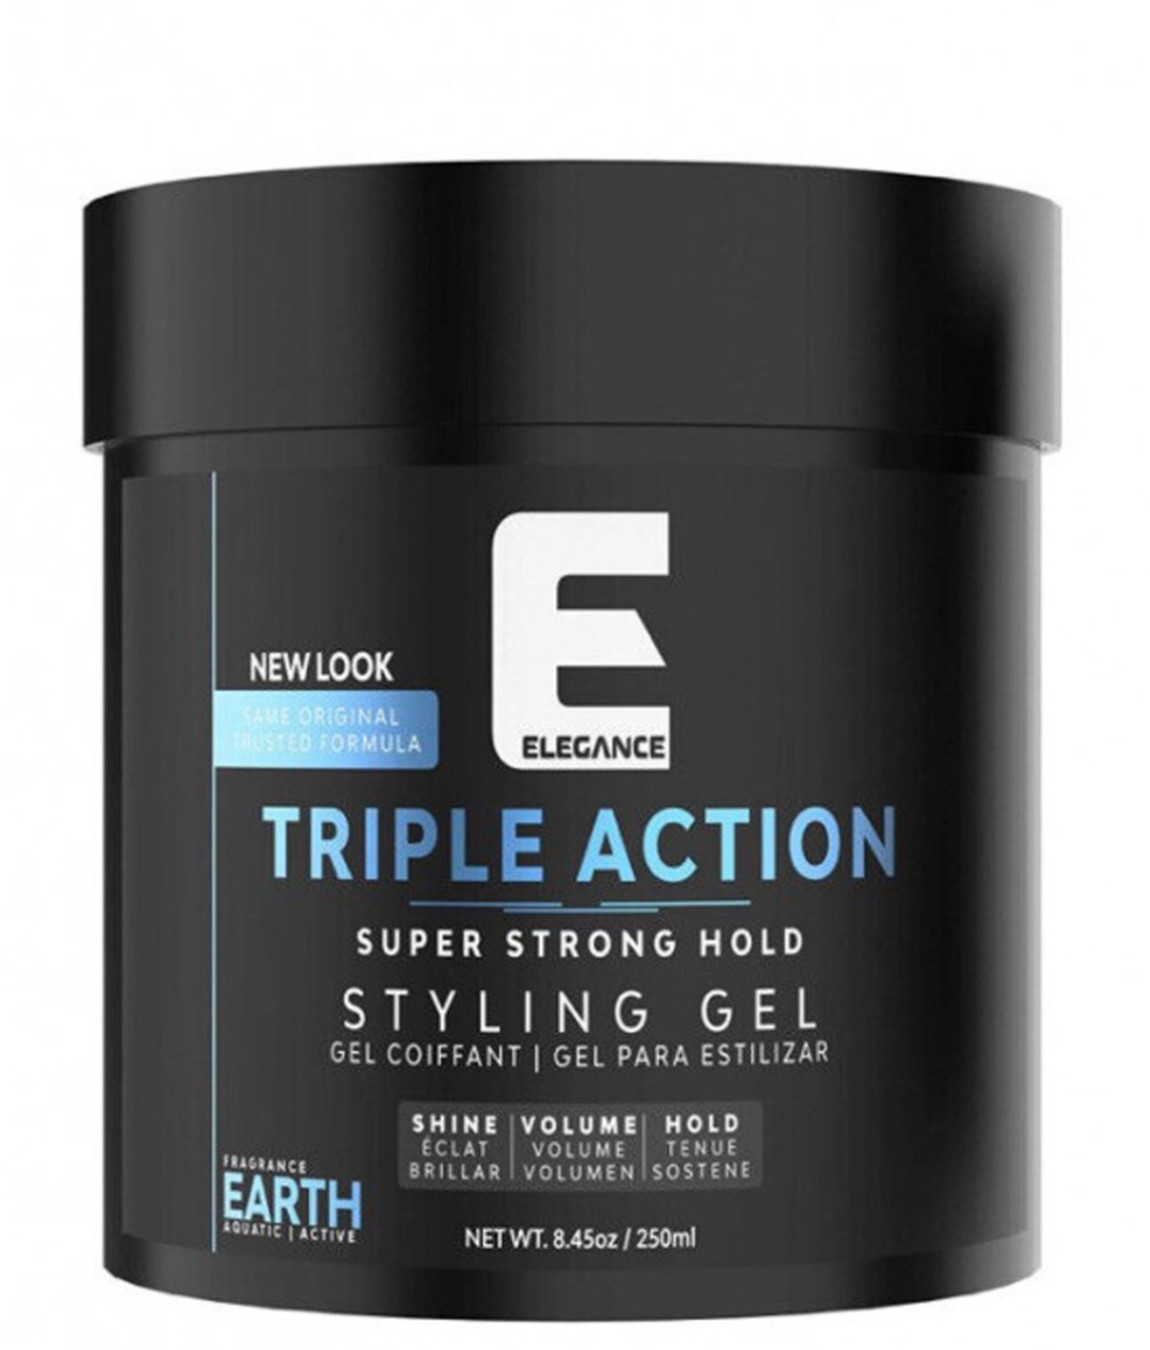 Elegance Triple Action Styling Hair Gel (8.45 oz)